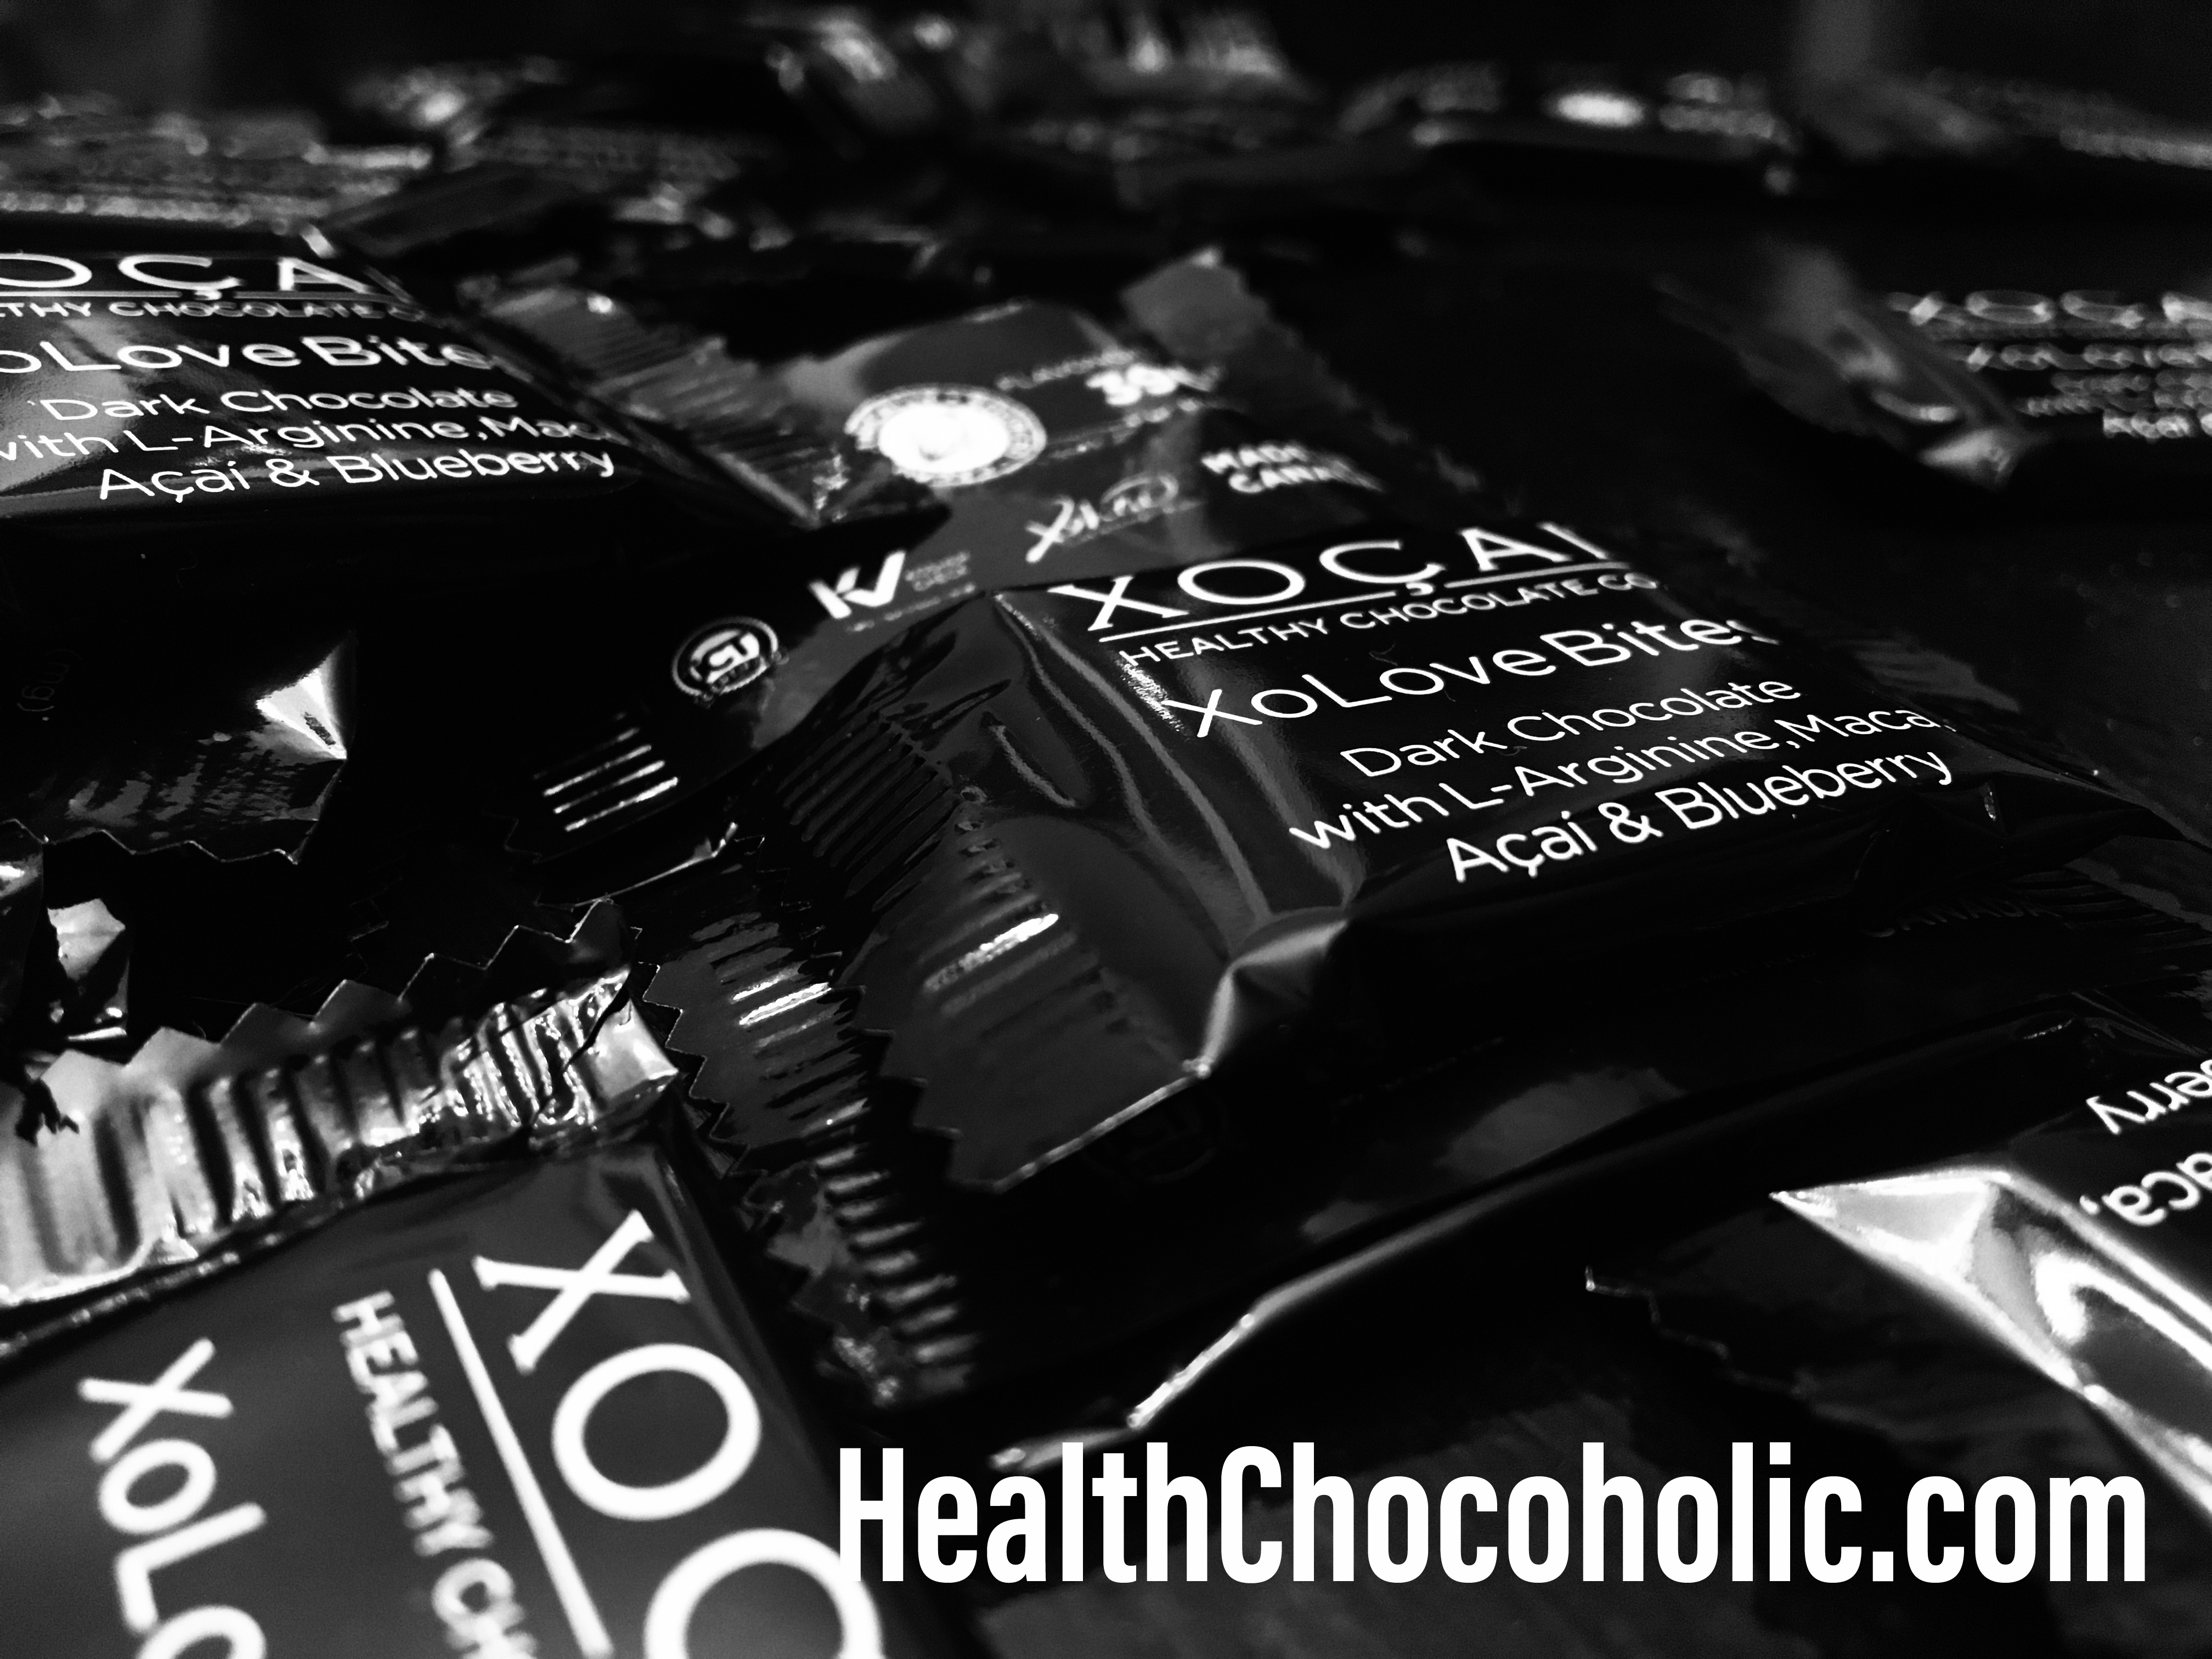 Benefits of Chocolate With Maca For Adrenal Fatigue, Reducing Stress, Depression, Balancing Hormones & Improving Libido